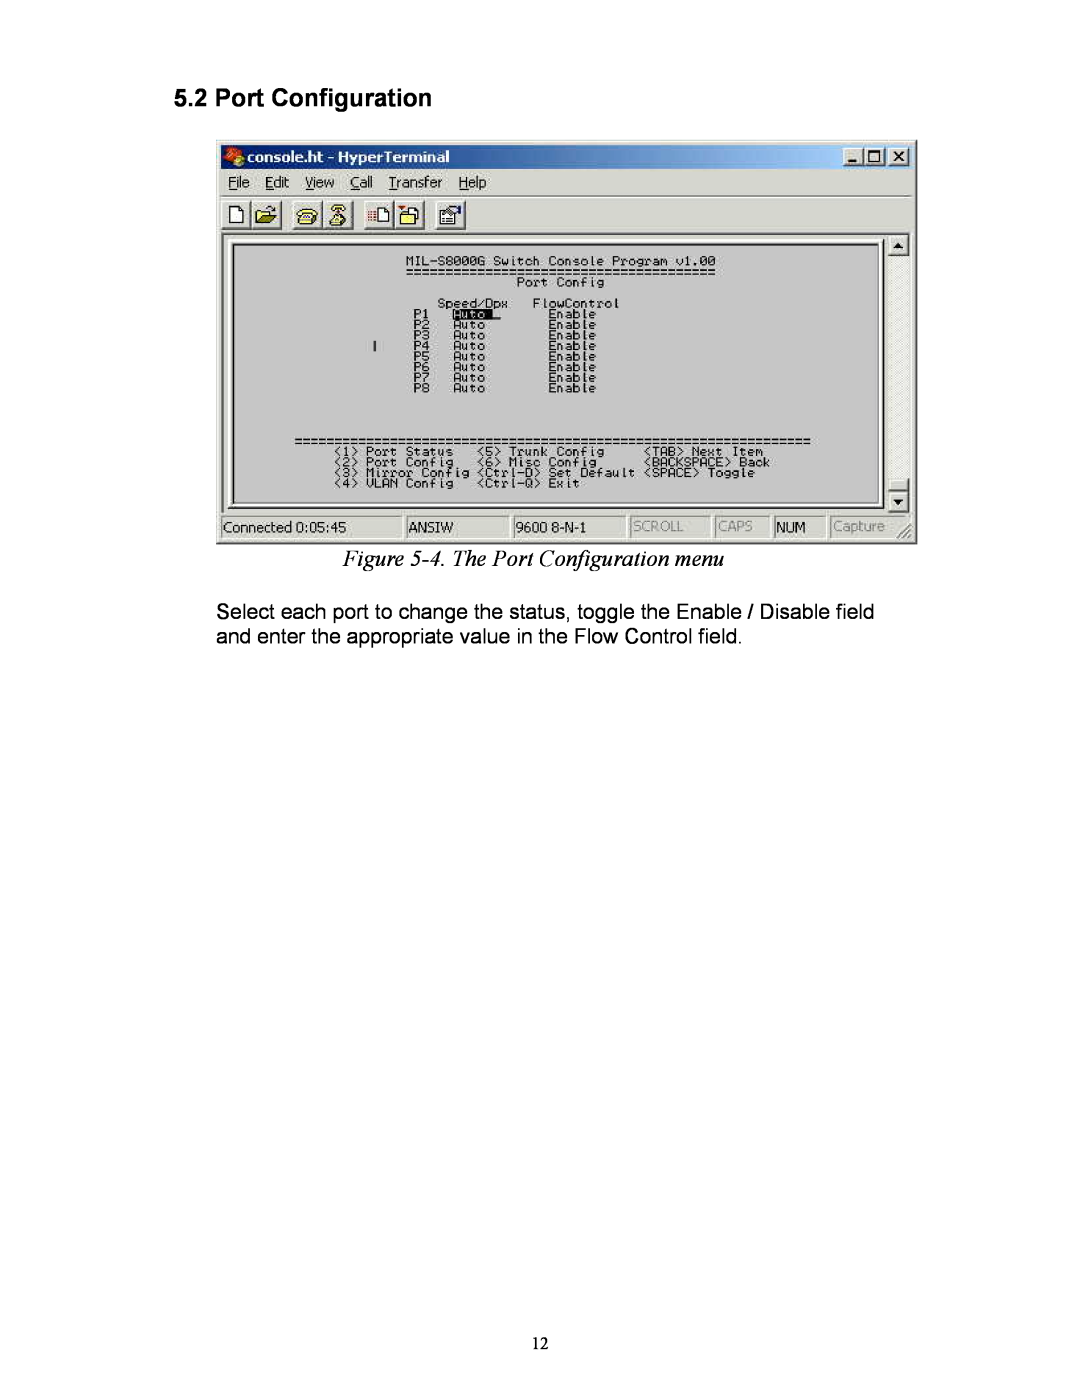 Milan Technology MIL-S8000G manual 4. The Port Configuration menu 